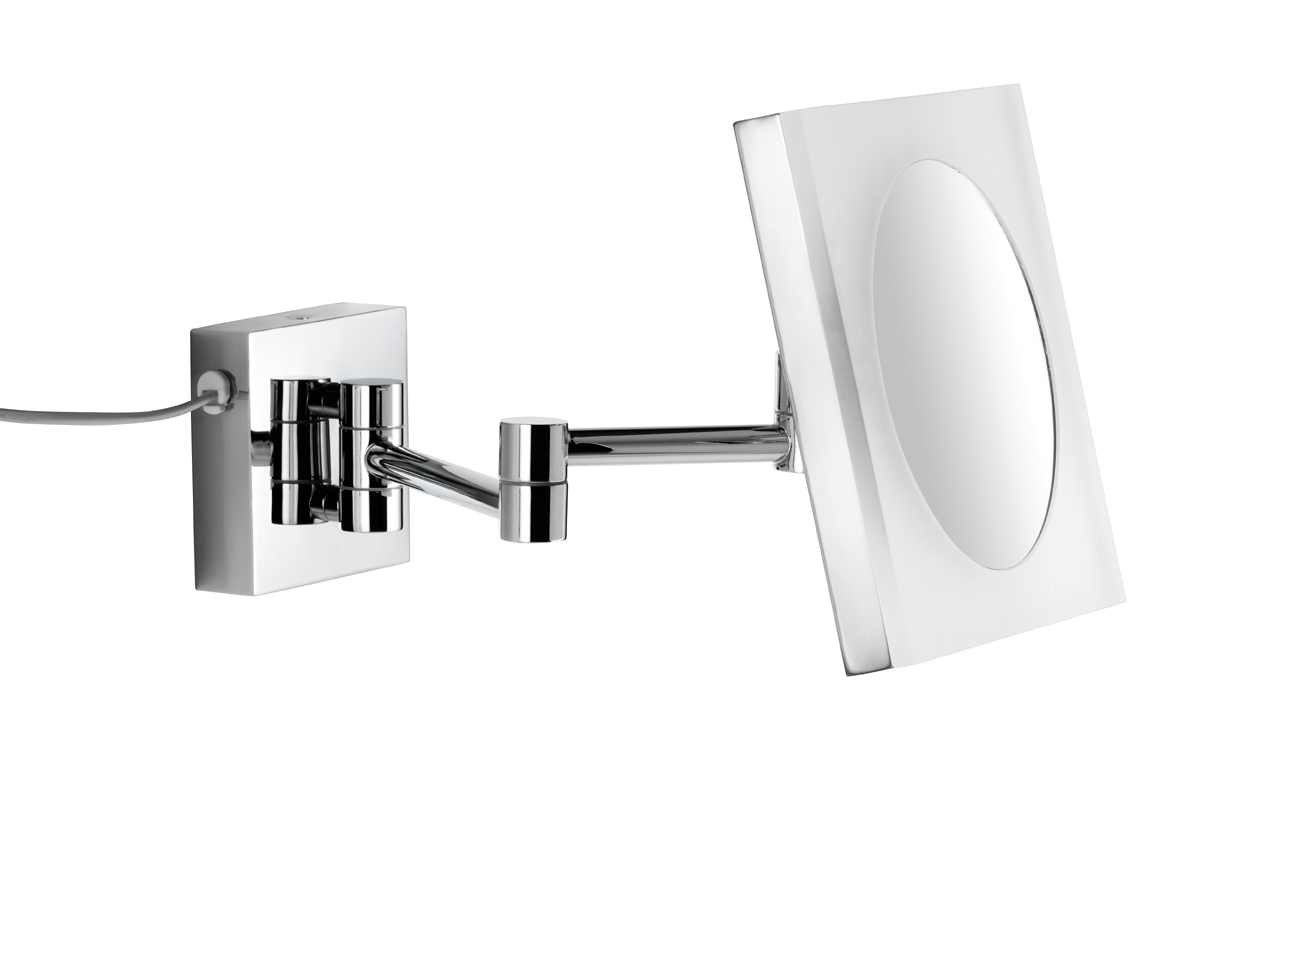 AVENARIUS Kosmetikspiegel Wand Kabel
eckig, LED, 5-fach, 2-armig, Serie Kosm 9505105010